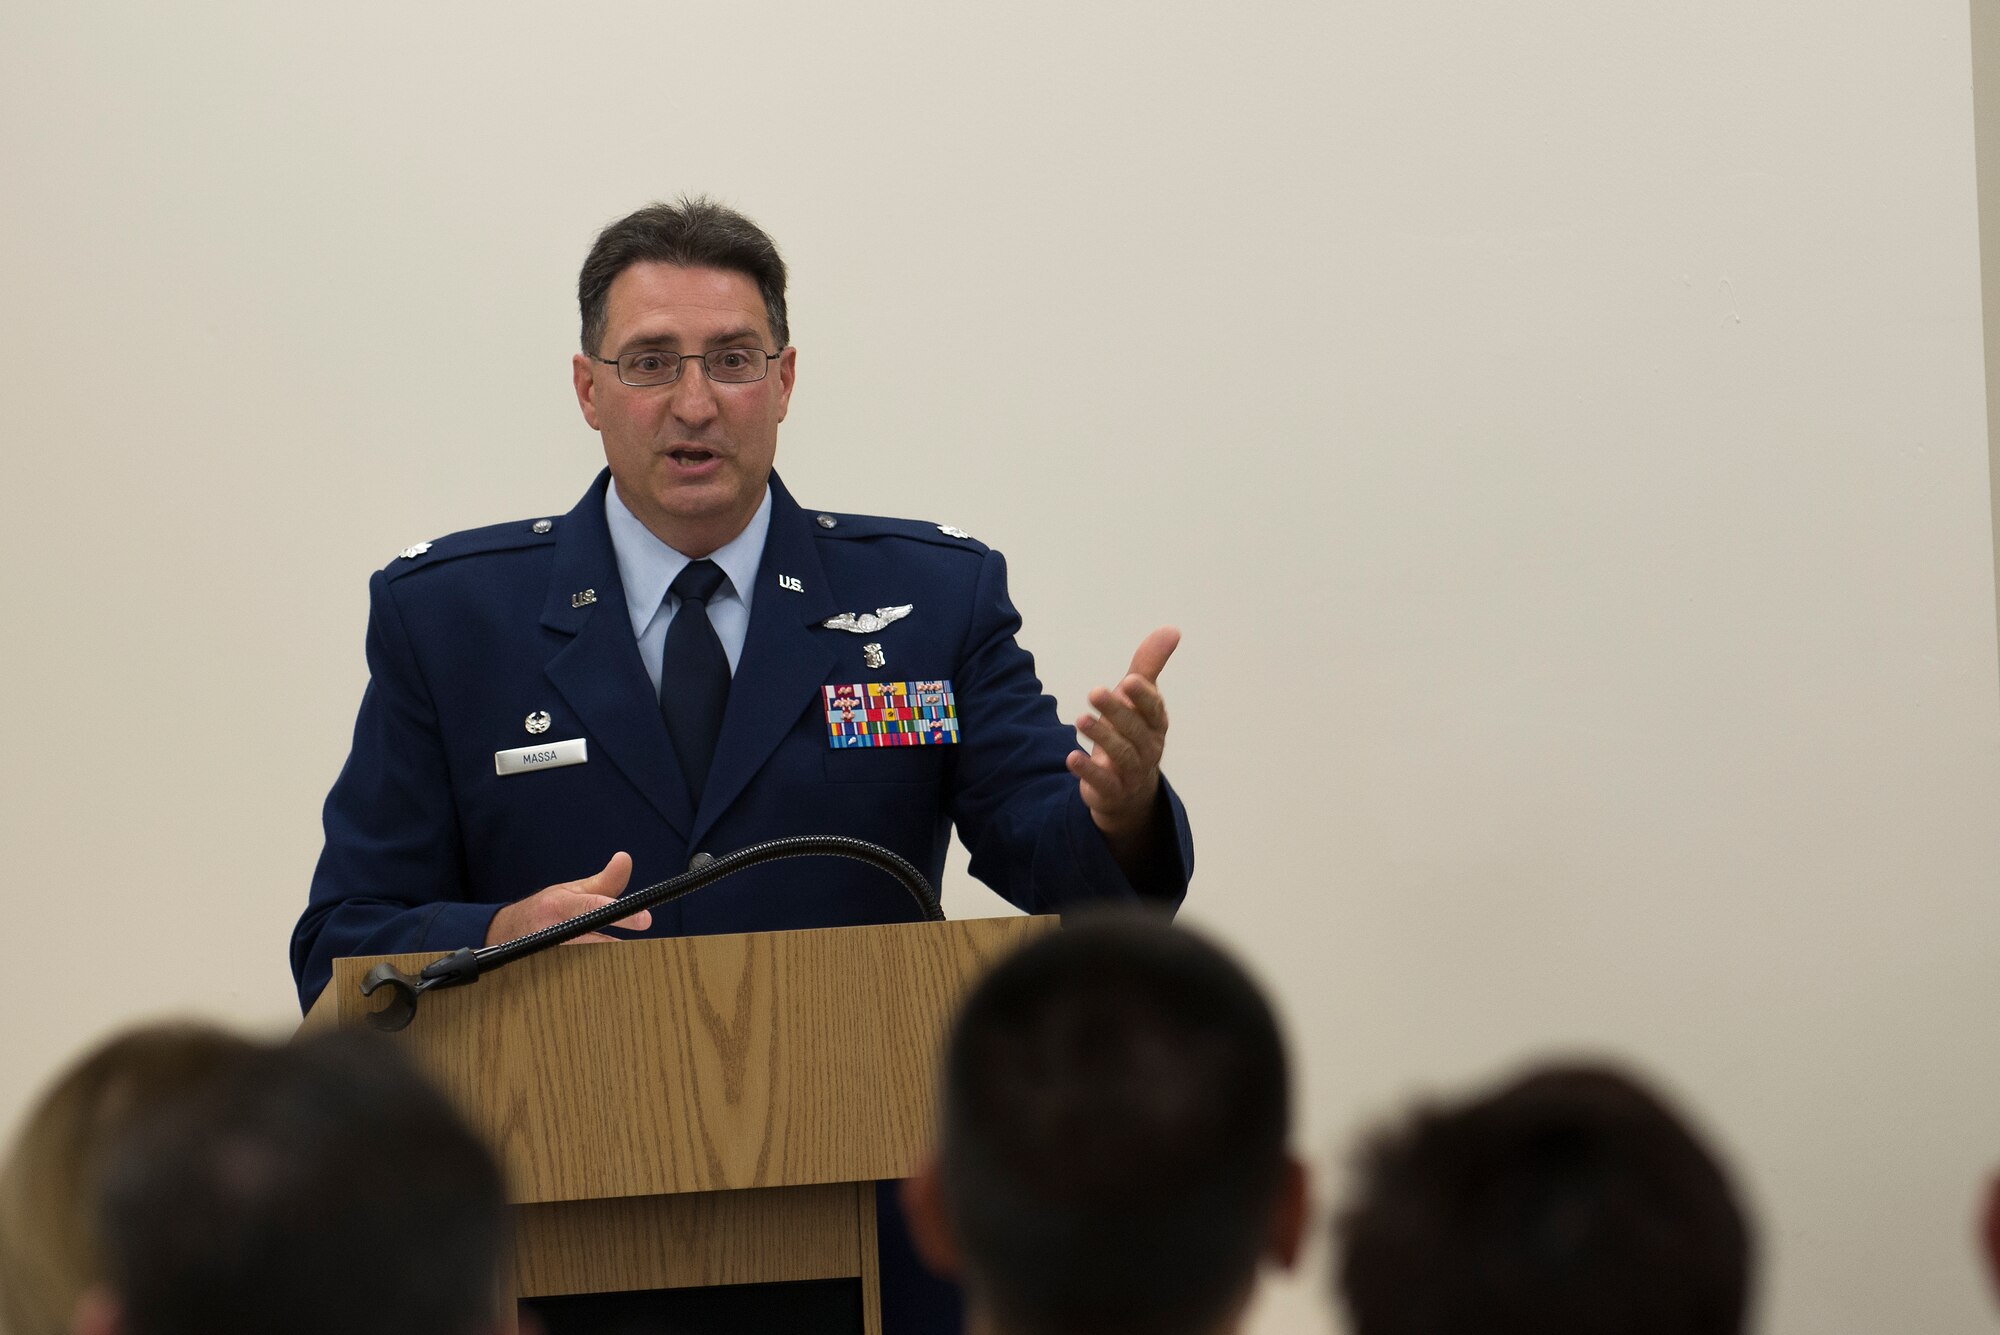 Lt. Col. Thomas Massa assumed command of the 375th Aerospace Medicine Squadron June 15. (U.S. Air Force photo/Airman 1st Class Megan Friedl)